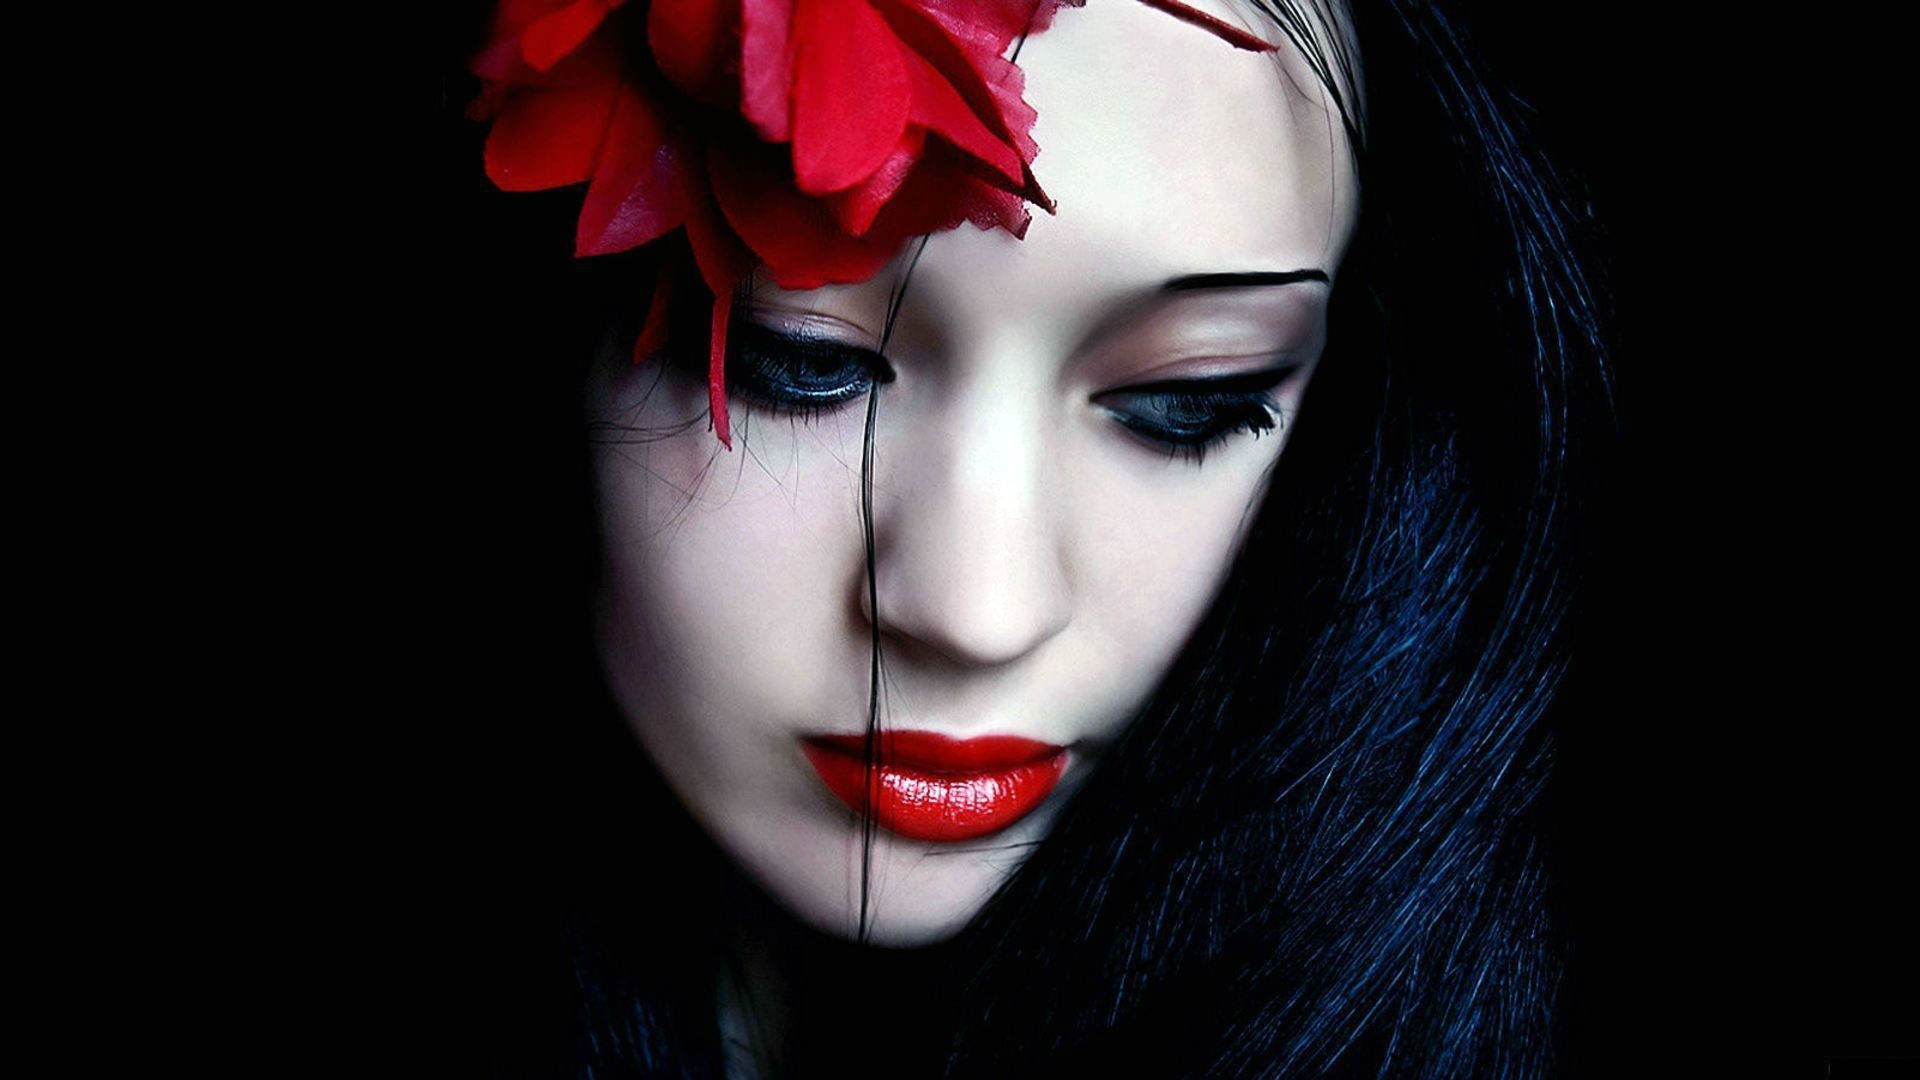 1920x1080 Women females girls gothic vampire face pale sad sorrow emotions red  contrast dark wallpaper |  | 24010 | WallpaperUP